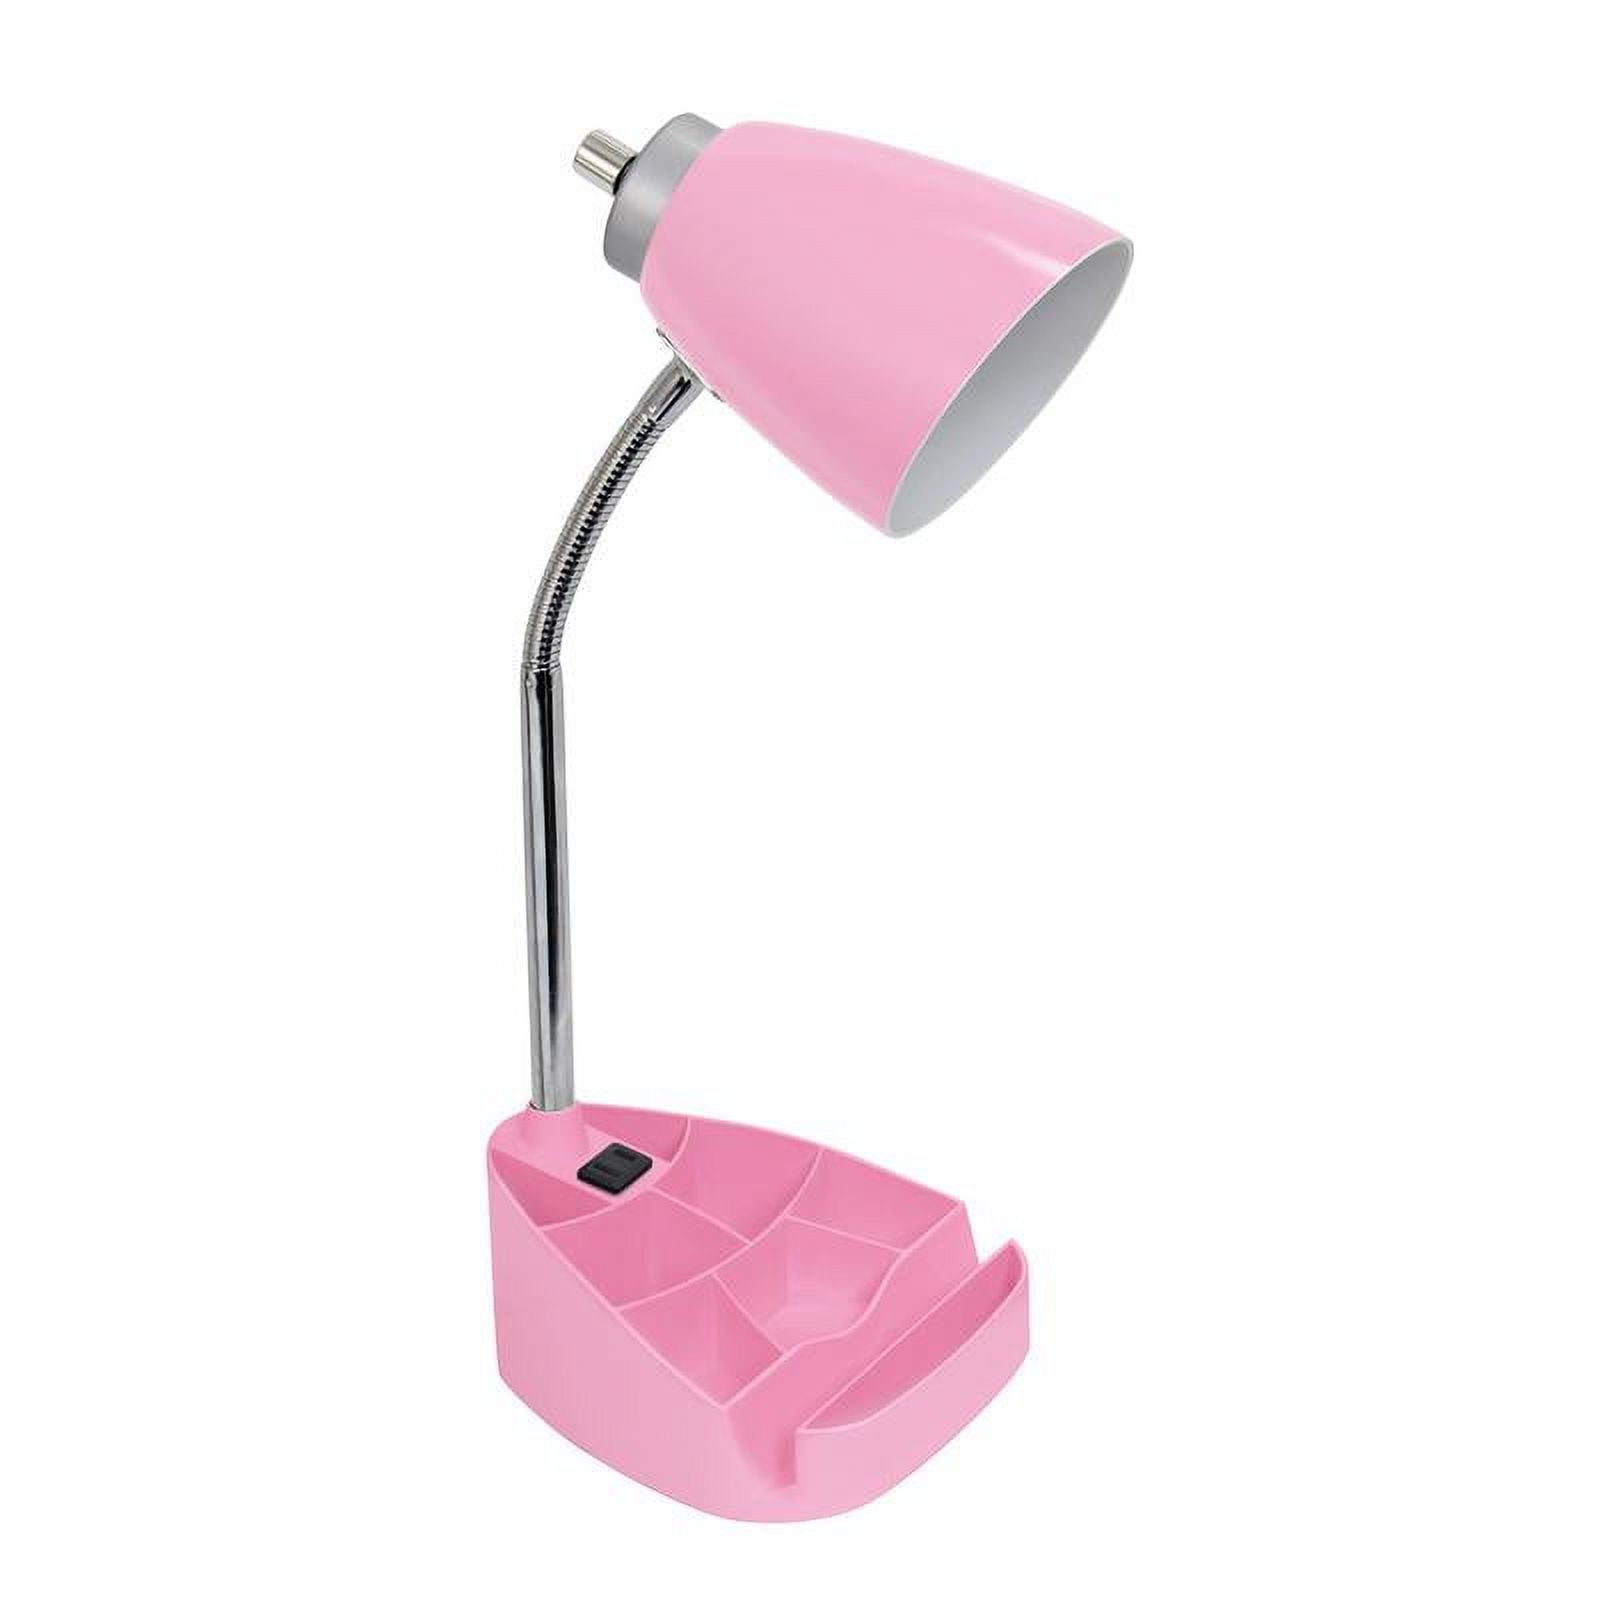 Ld1057-pnk Gooseneck Organizer Desk Lamp With Ipad Tablet Stand Book Holder & Charging Outlet, Pink